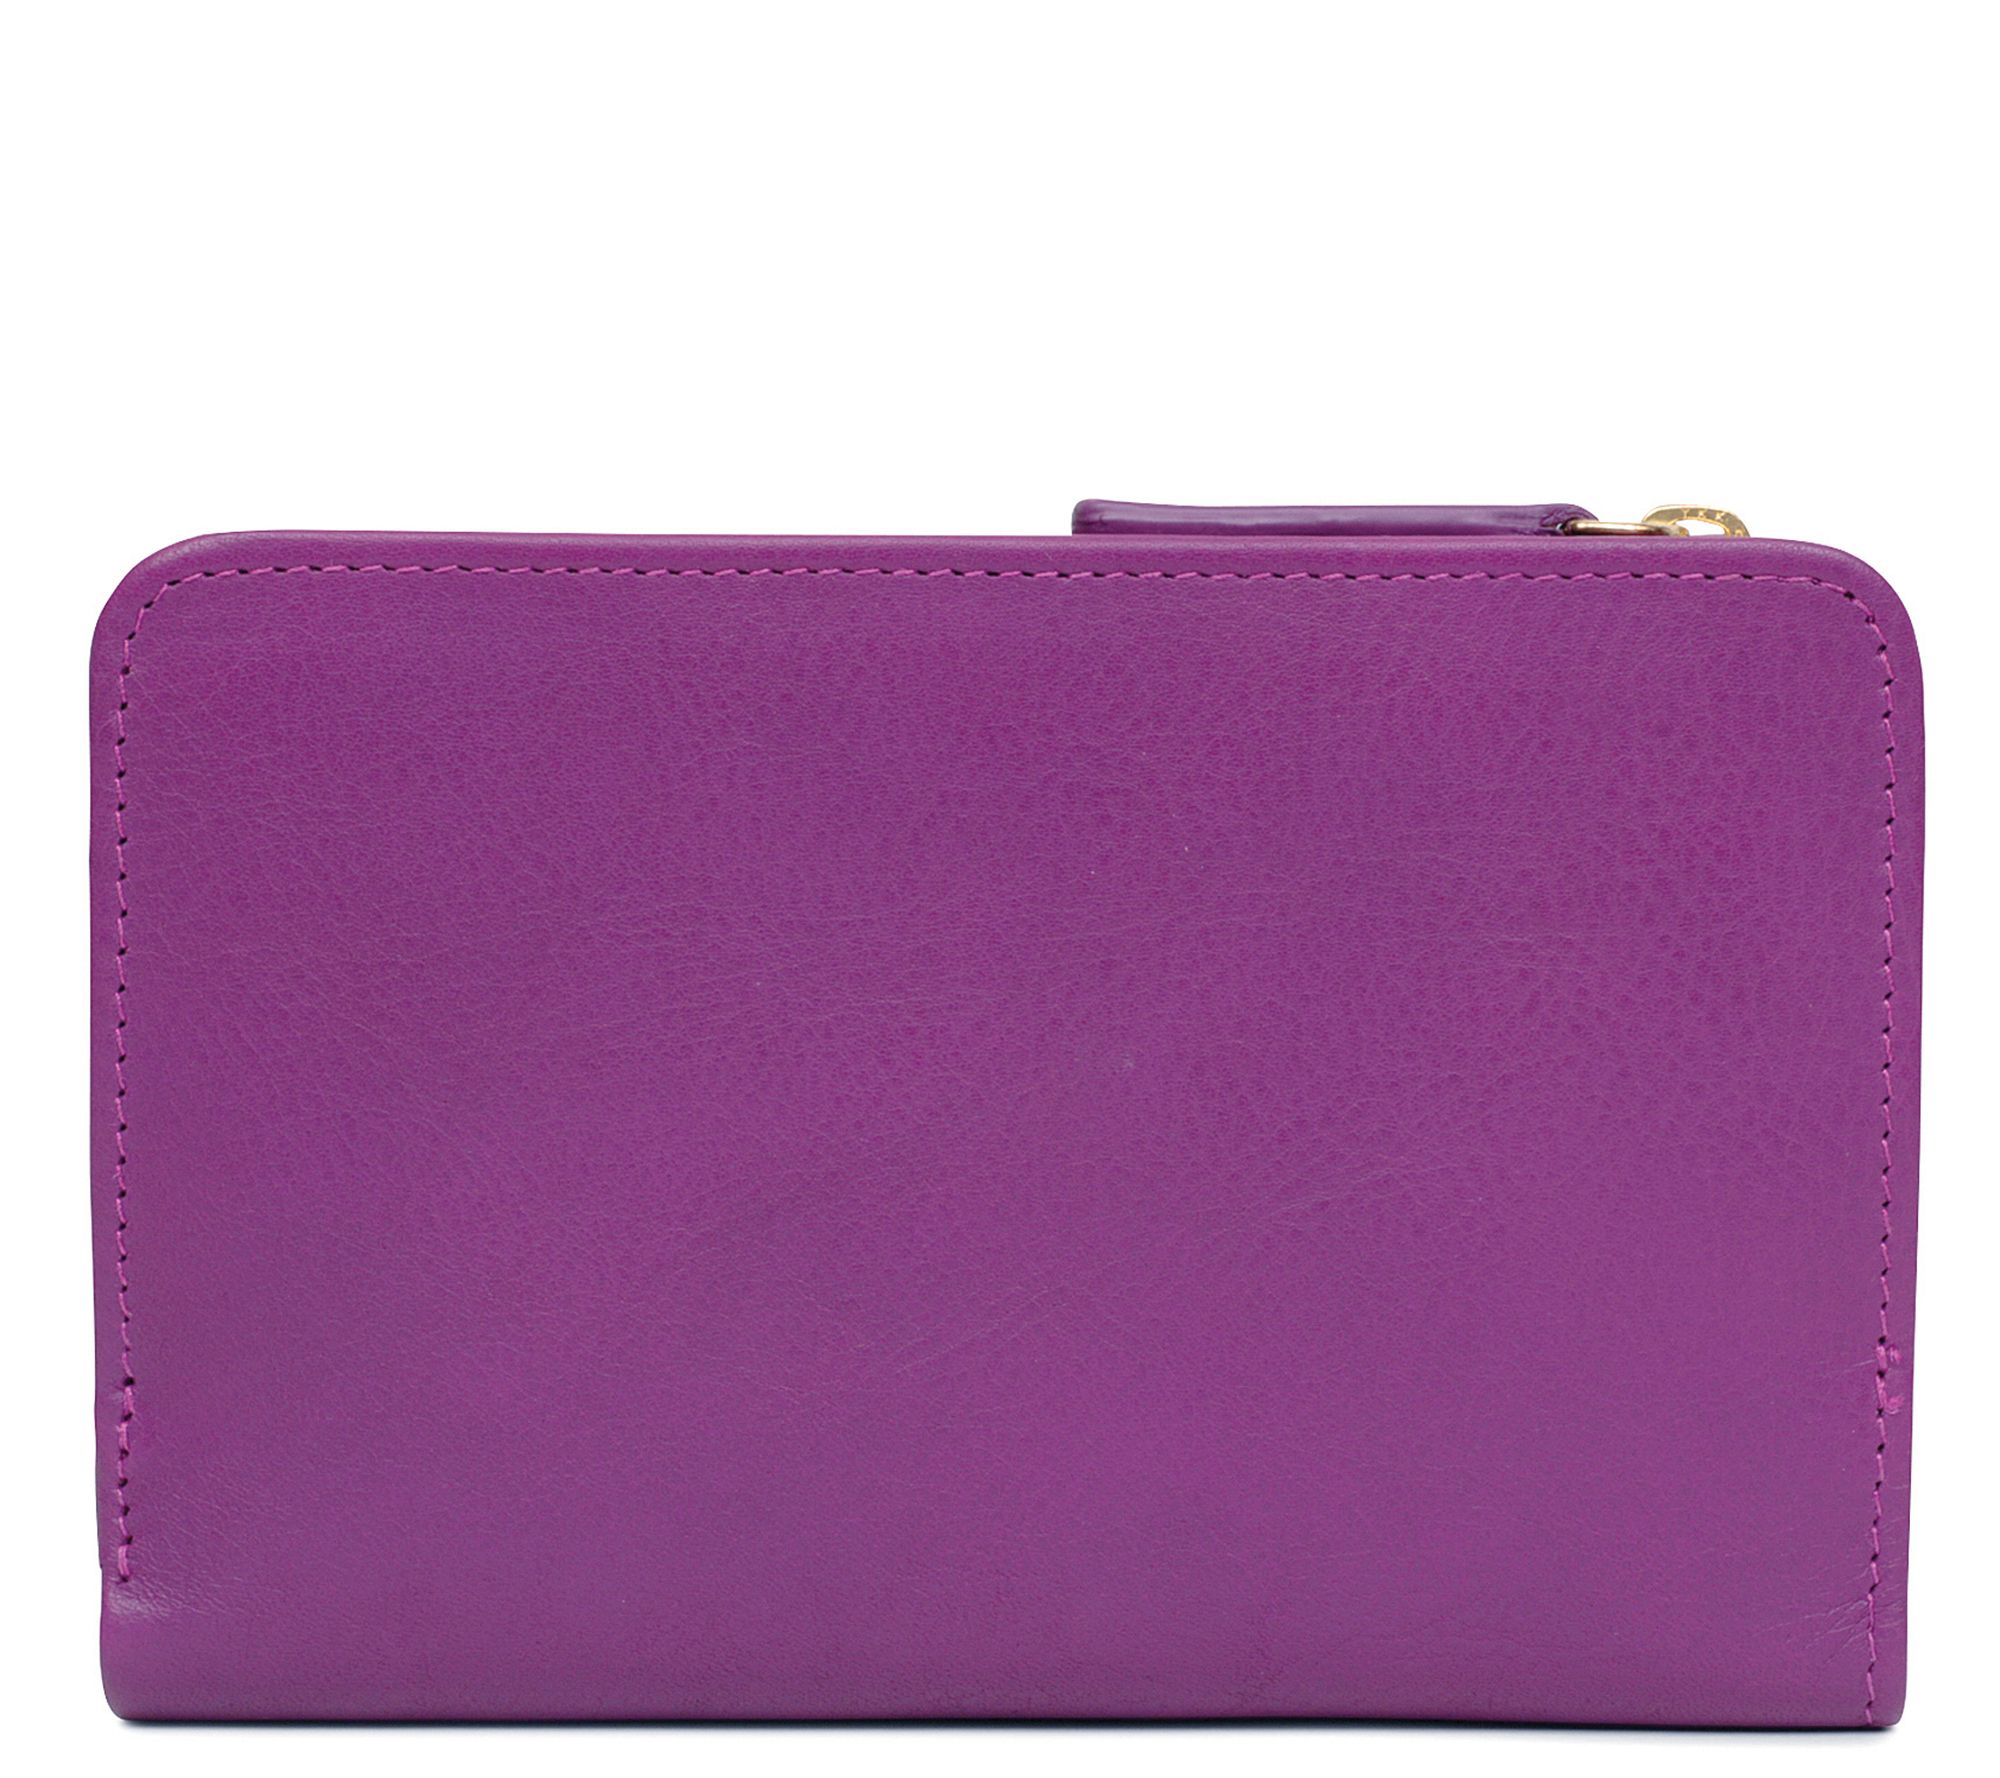 RADLEY London Leather Medium Pockets Wallet - QVC.com